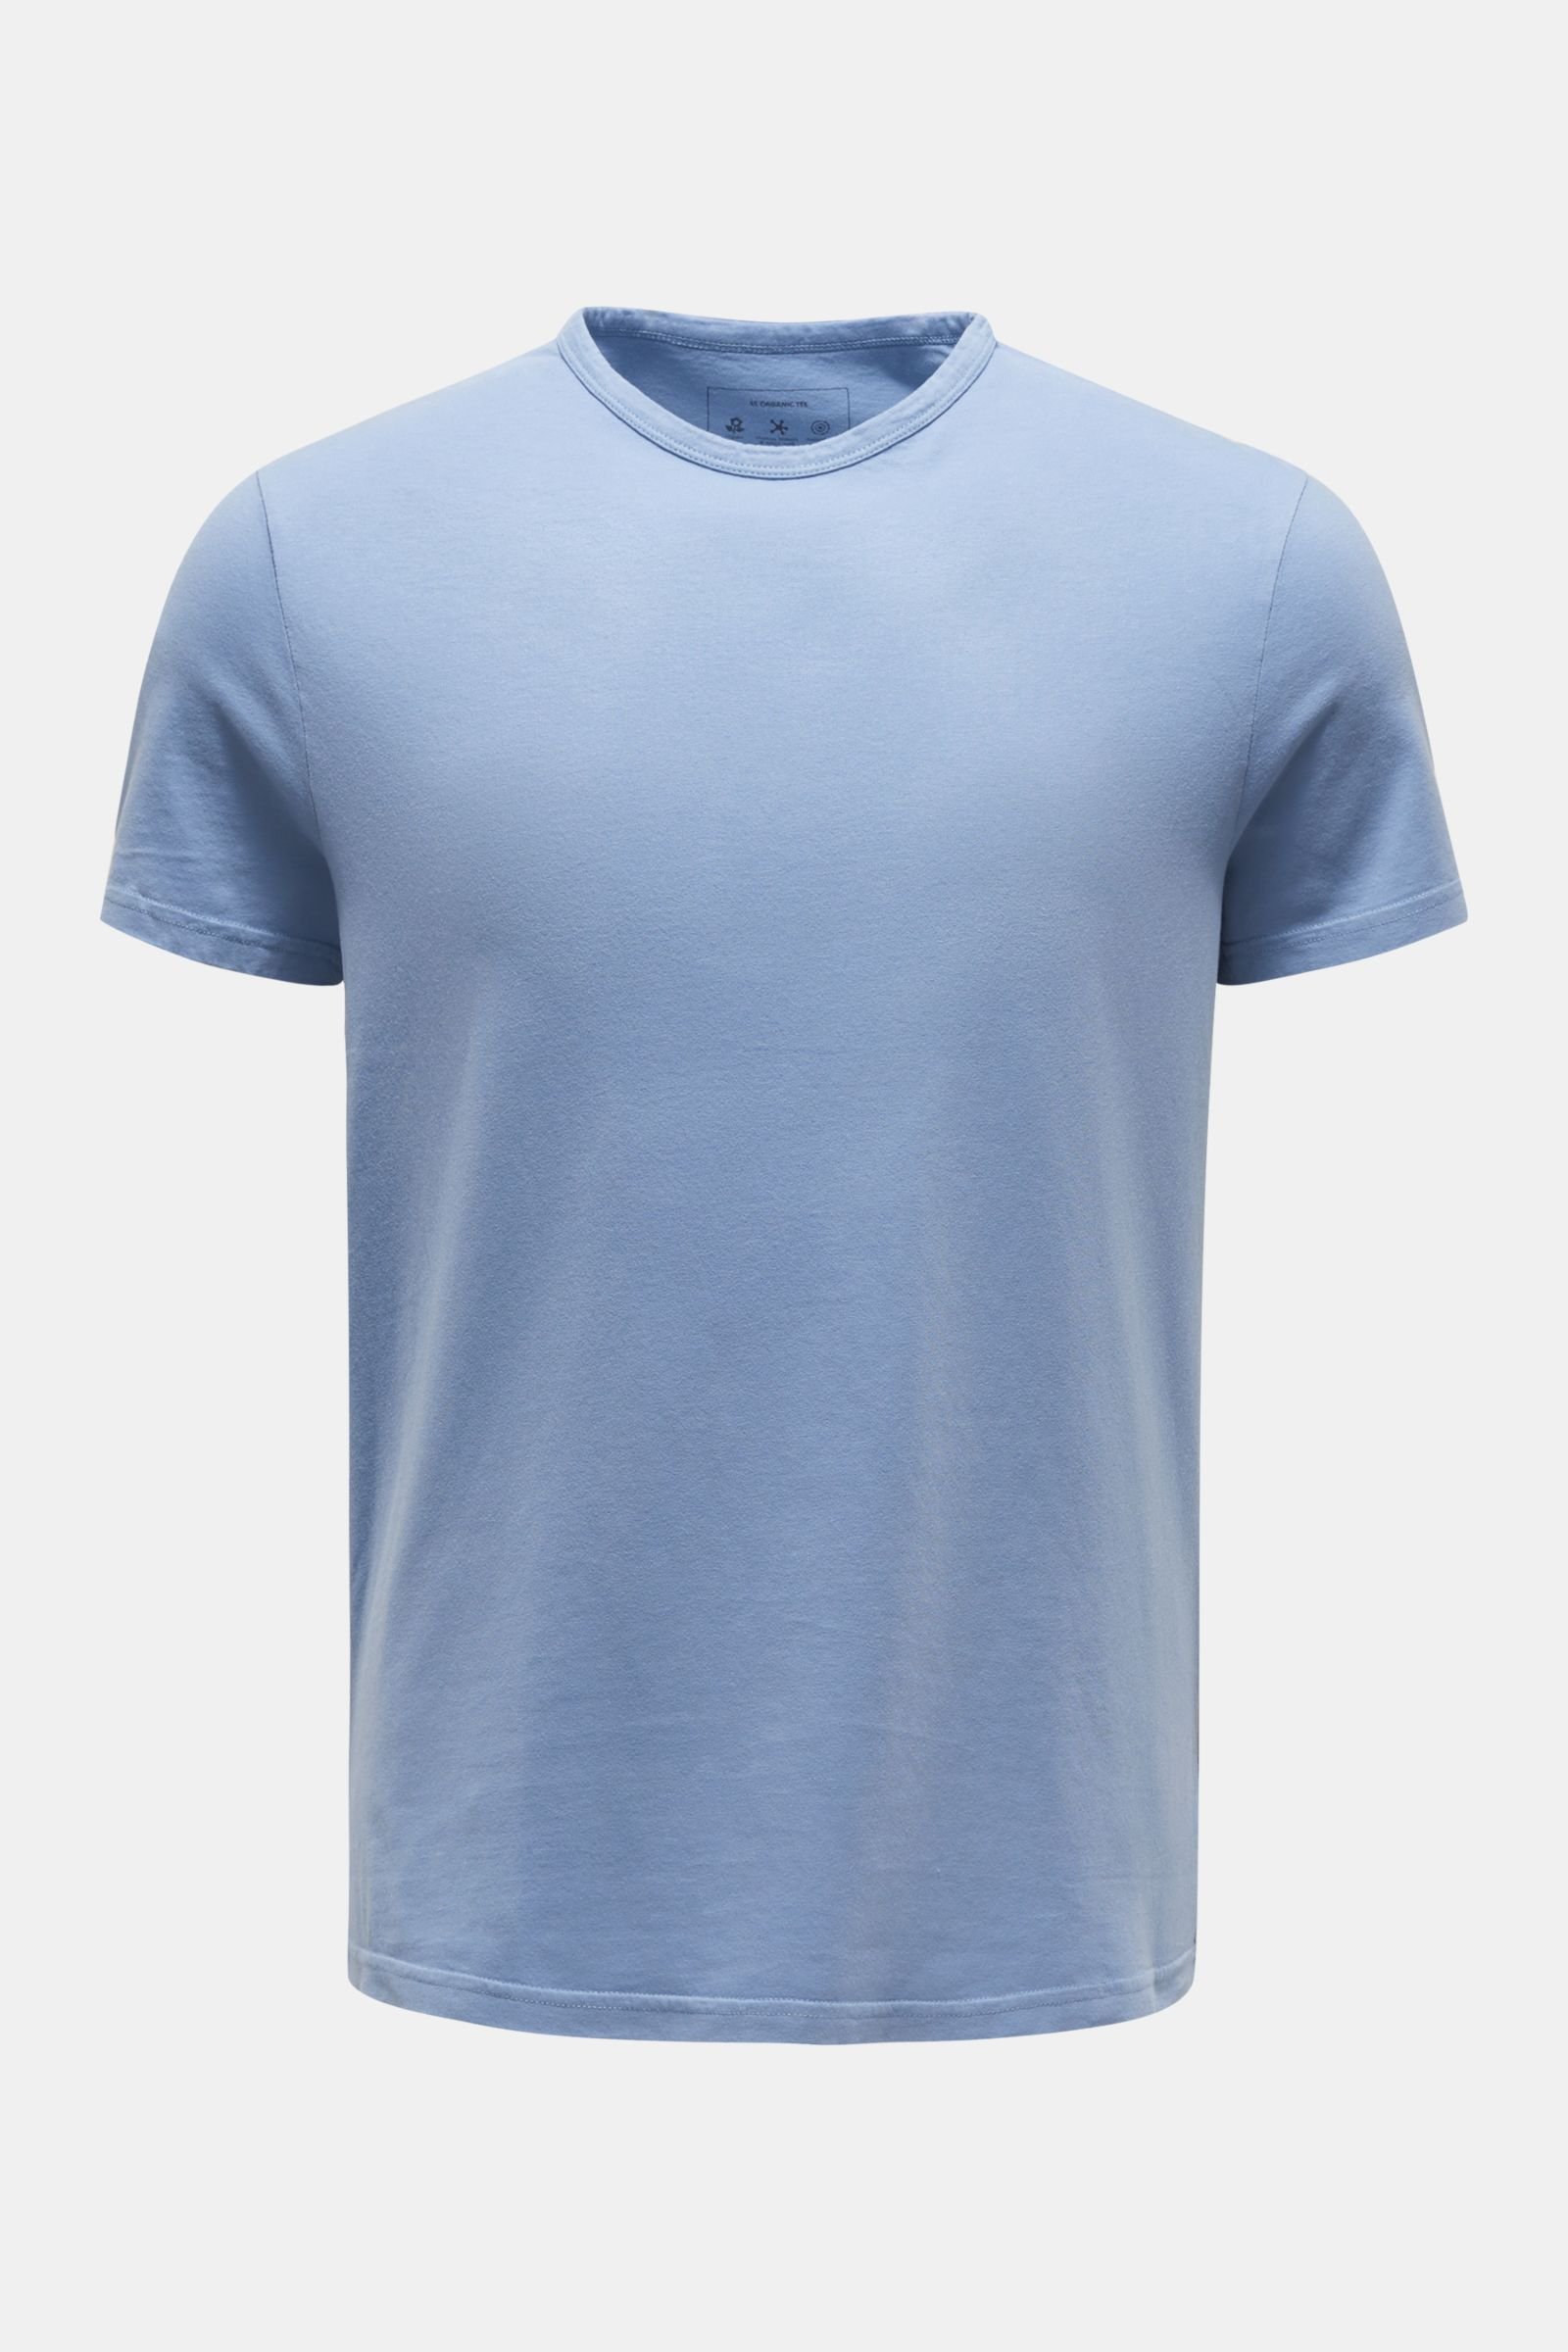 Crew neck T-shirt 'Organic Tee' light blue